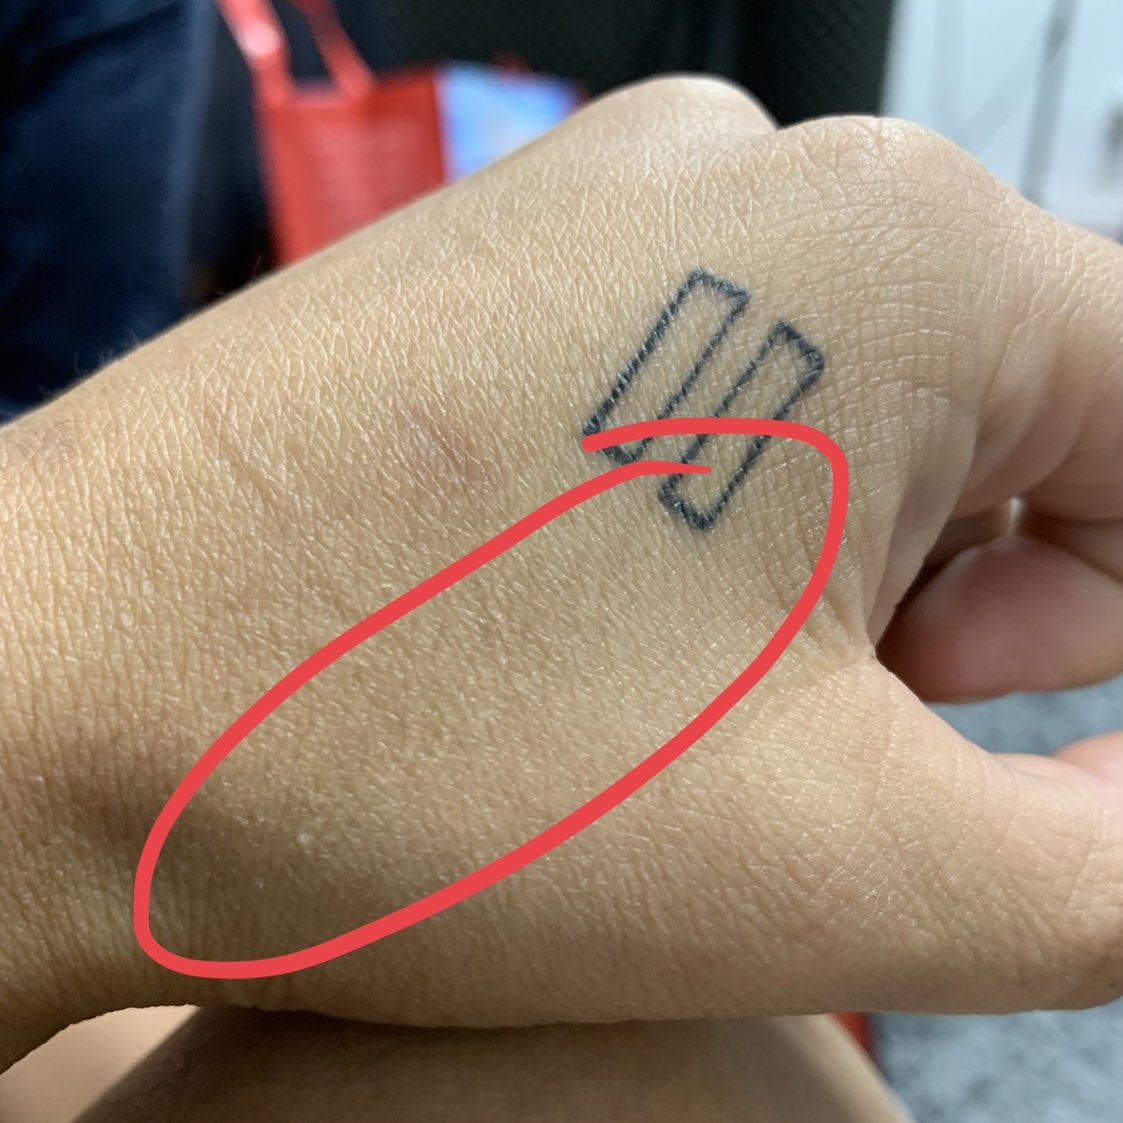 White ink cross tattoo on the finger.